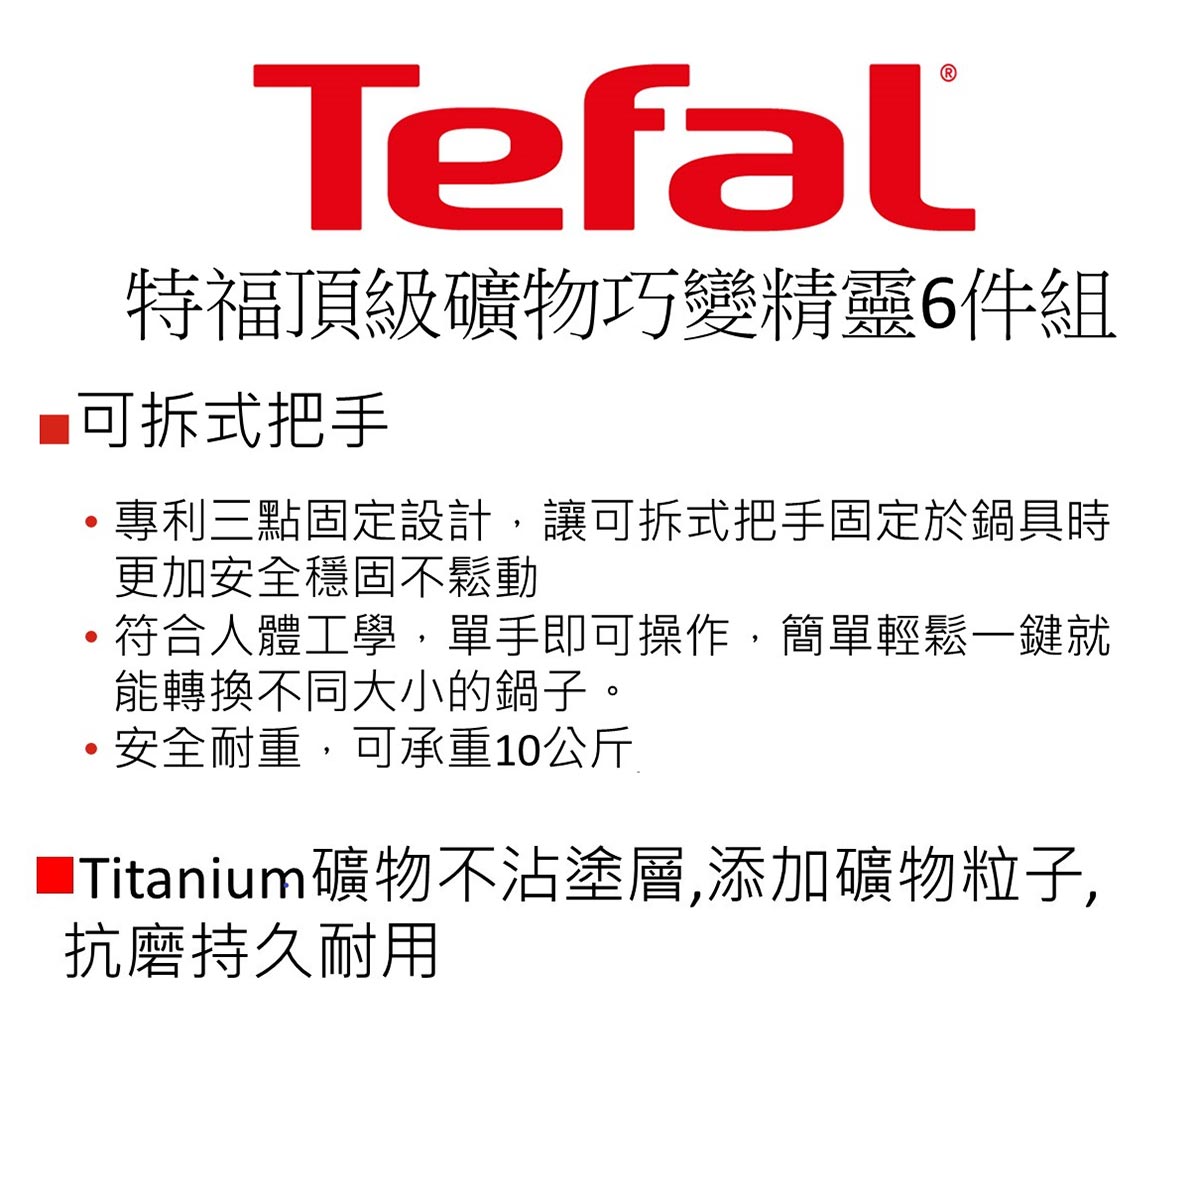 Tefal 頂級礦物巧變精靈系列 鍋具6件組，不沾好洗，安全無毒，可堆疊收納，空間節省50%。